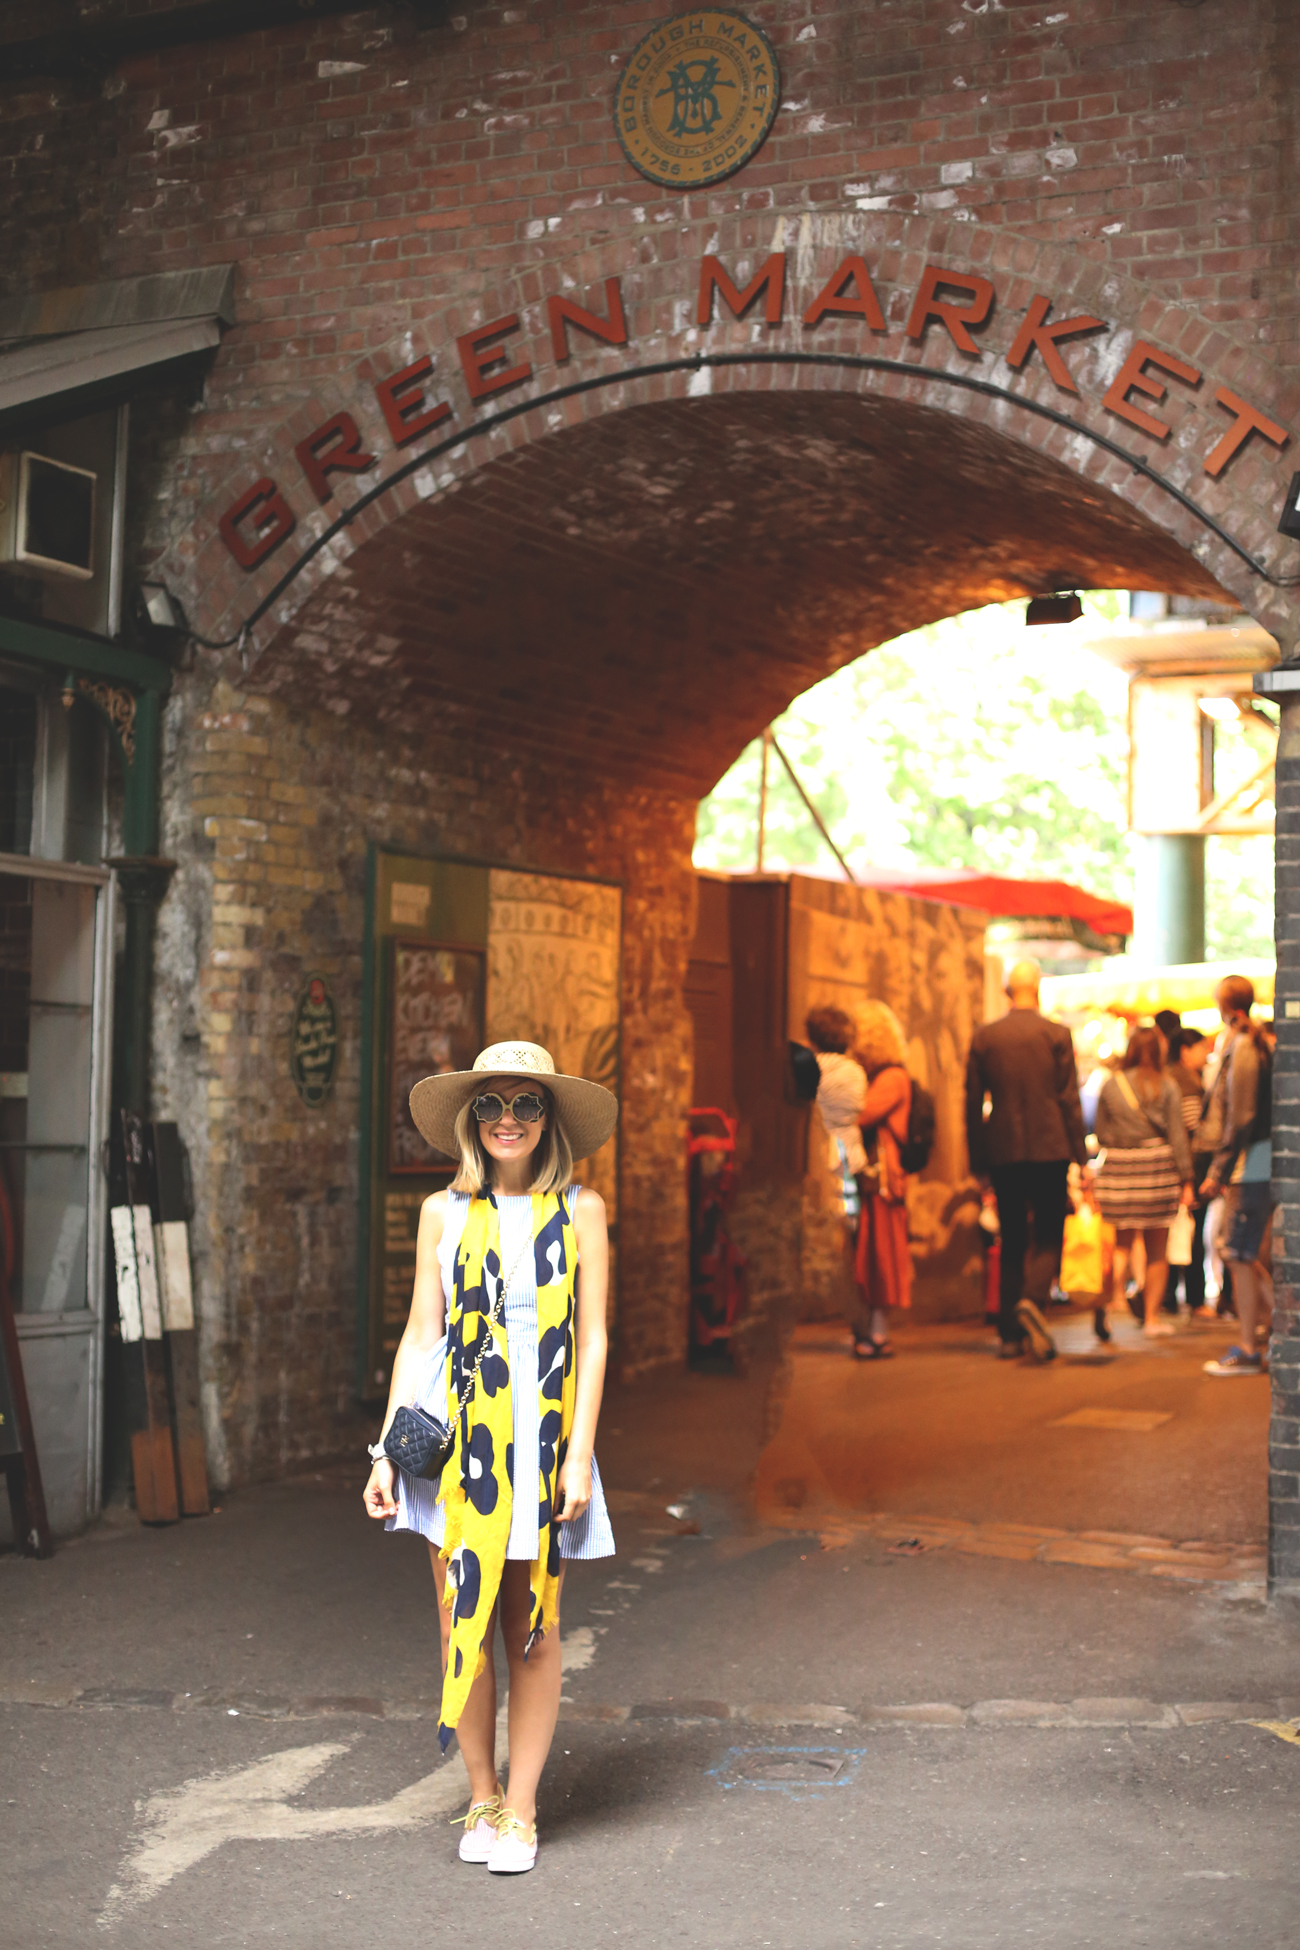 London markets, beefeater experiencie, my london, my showroom, life style blog, fashion blogger, priscila betancort,